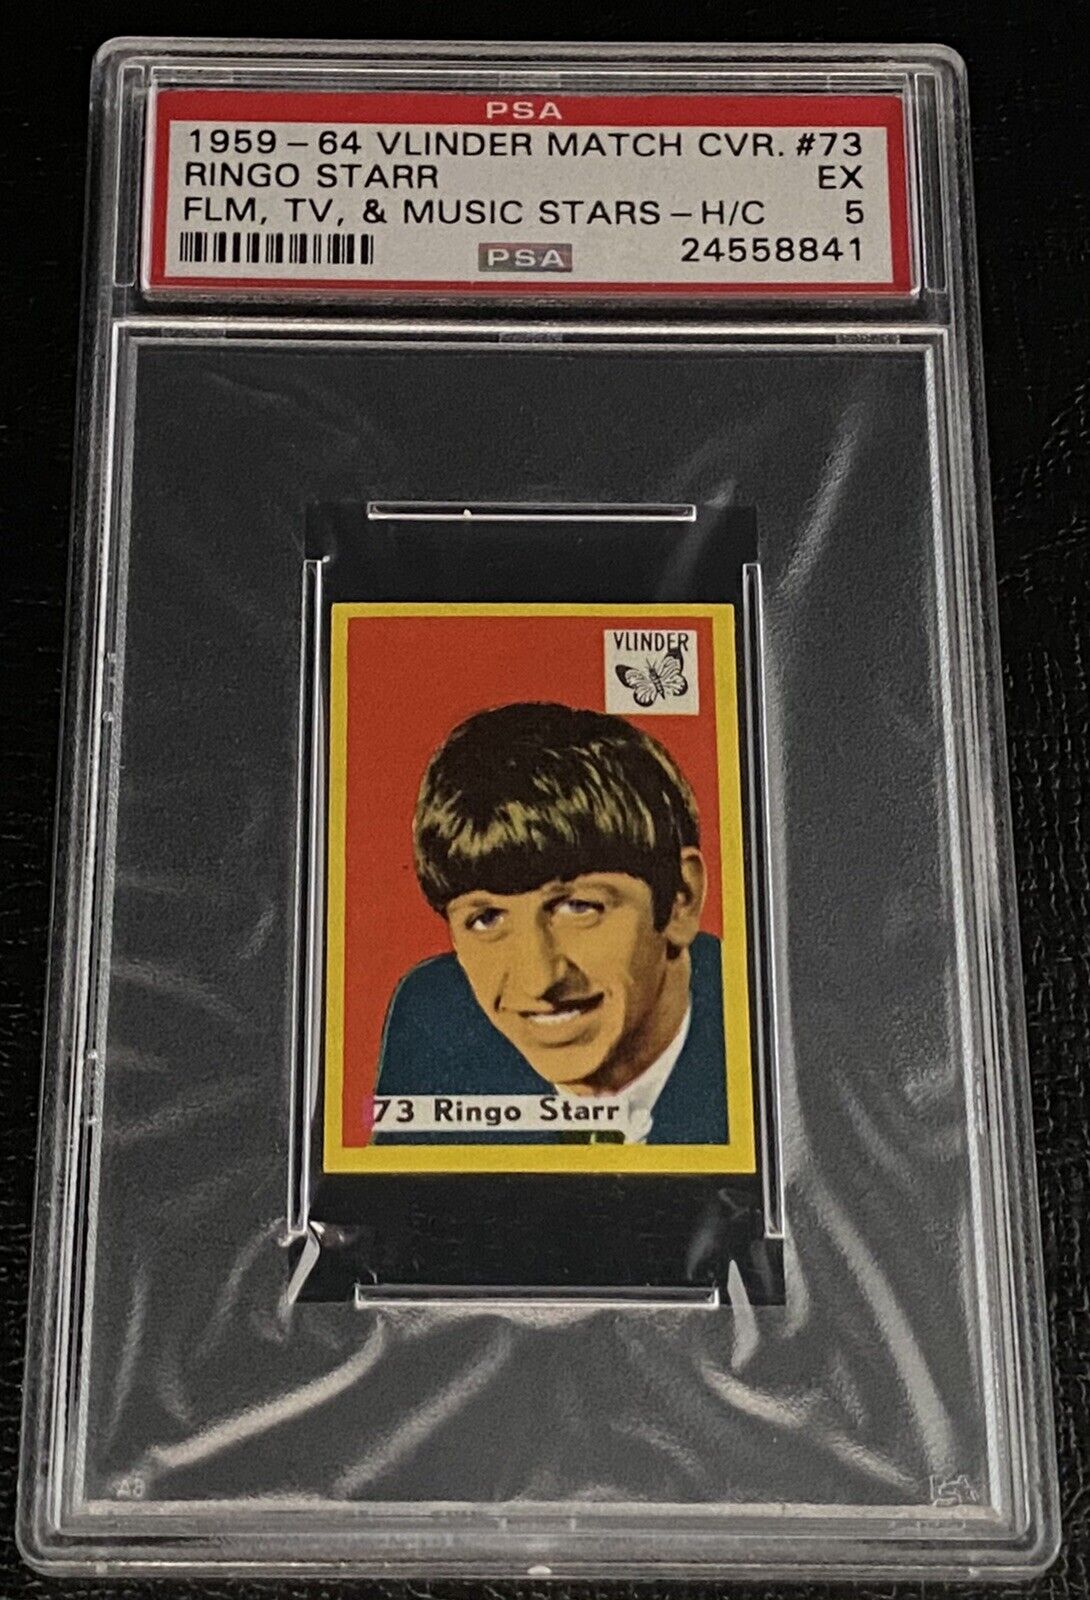 1959 - 1964 Ringo Starr Rookie Card PSA 5 Highest Grade #73 Match Cover Film TV